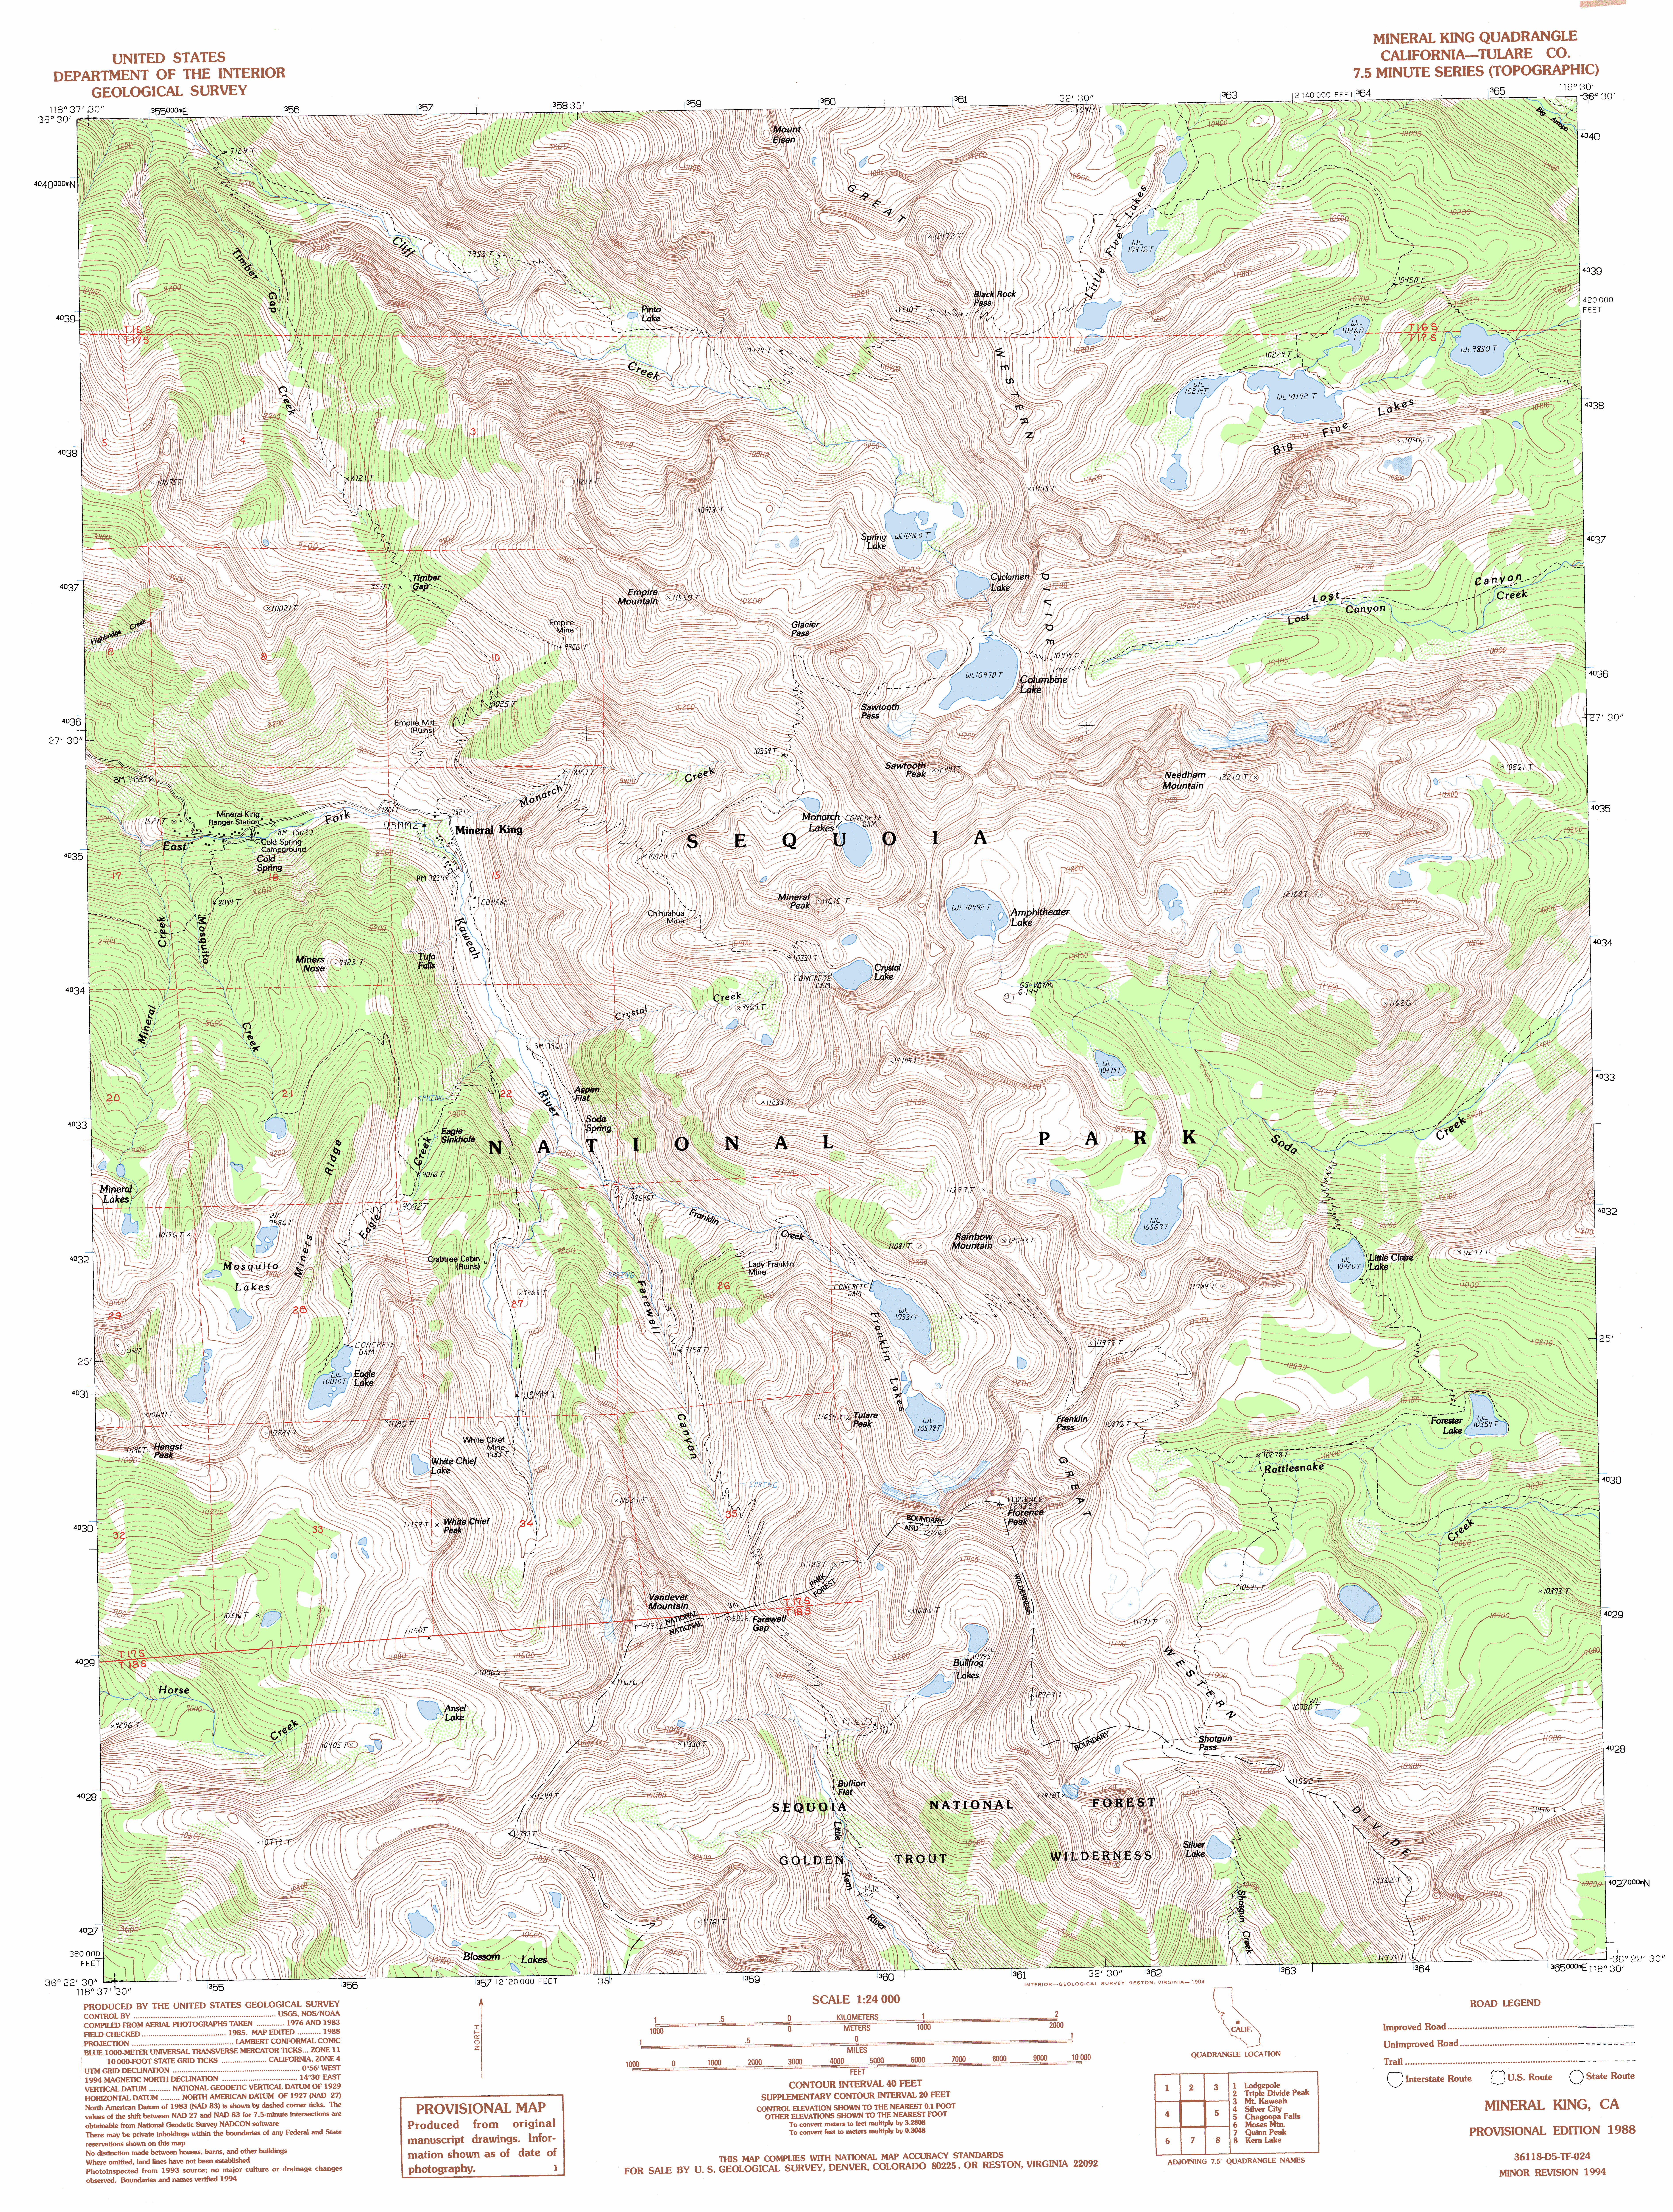 USGS topographic map sample